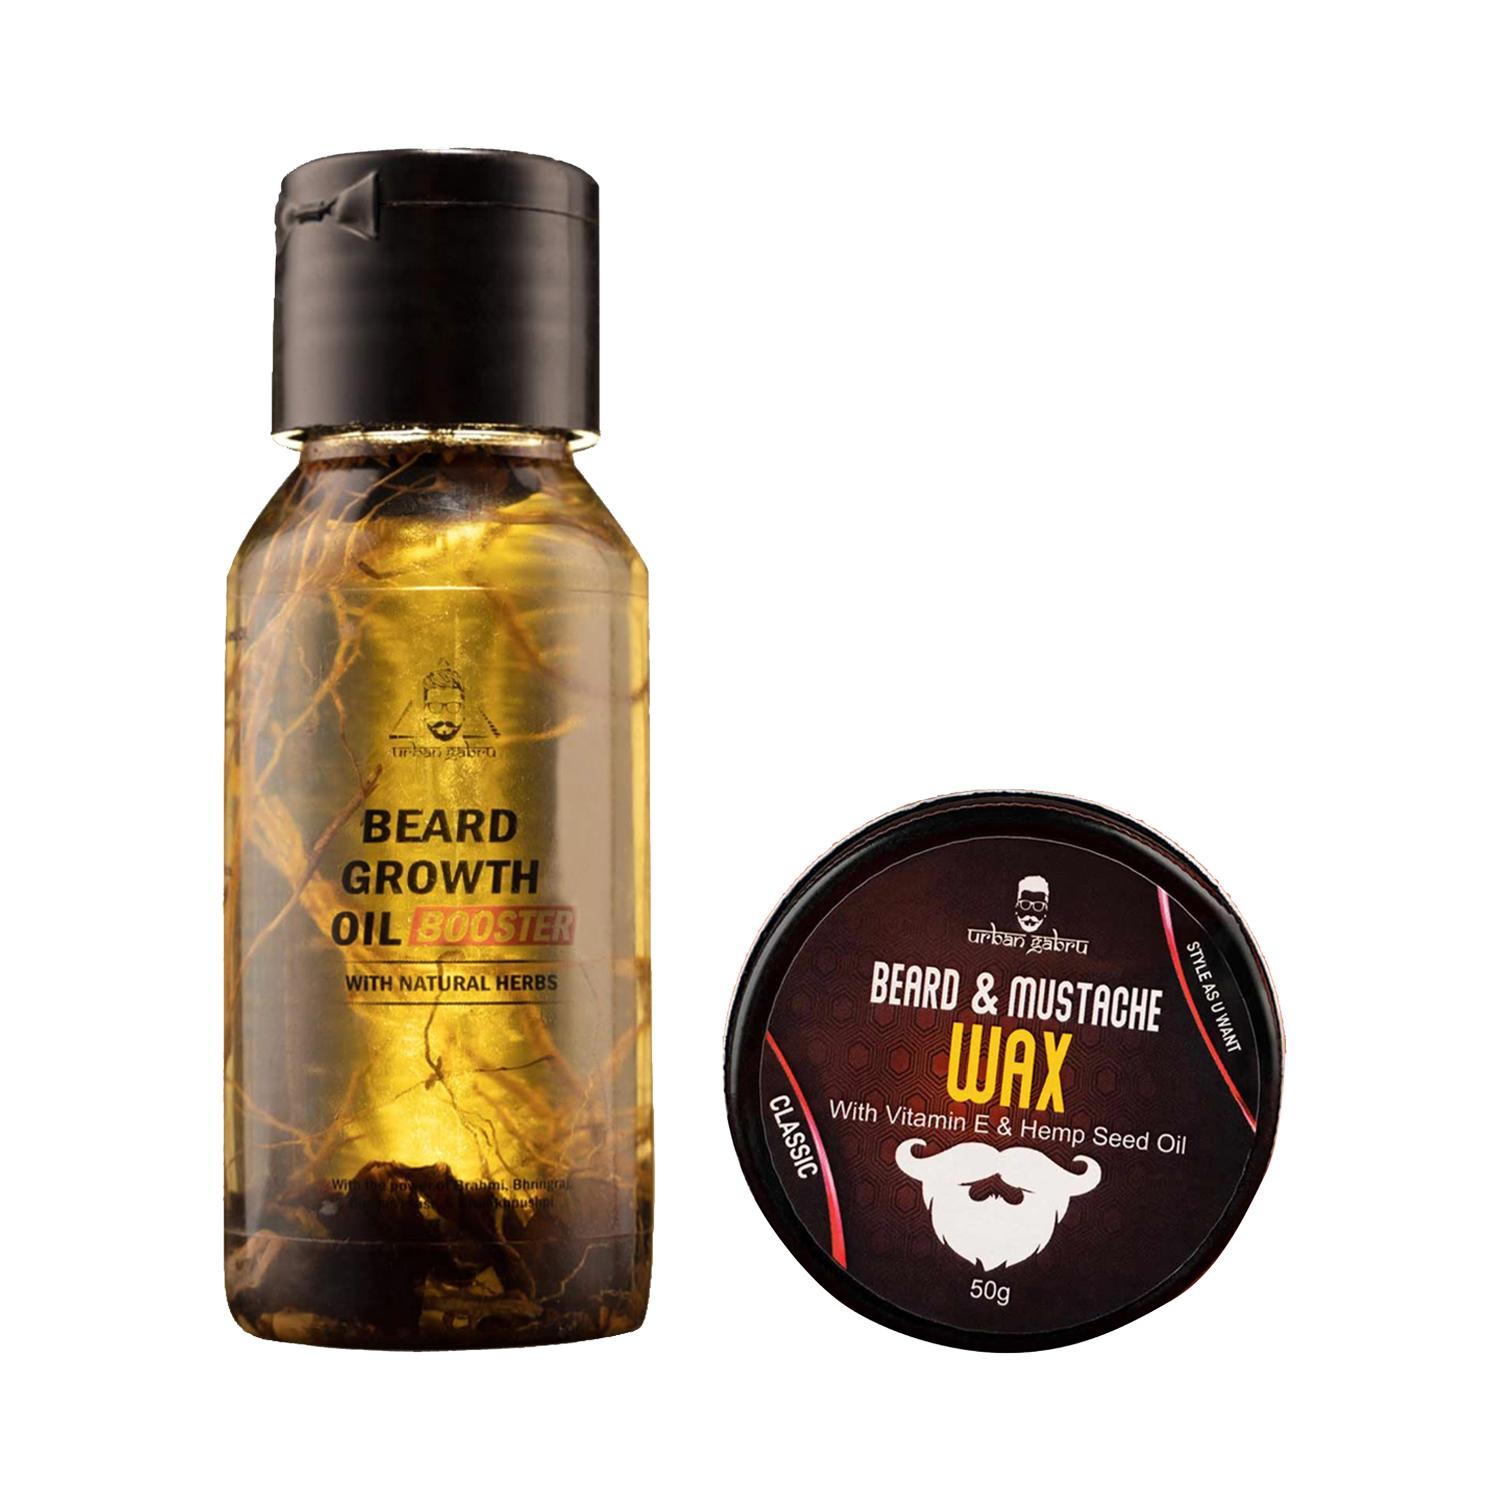 Urban Gabru | Urban Gabru Beard Mustache Wax vitamin& Hemp Seed Oil (50g) & Beard Growth Booster Oil (60ml) Combo